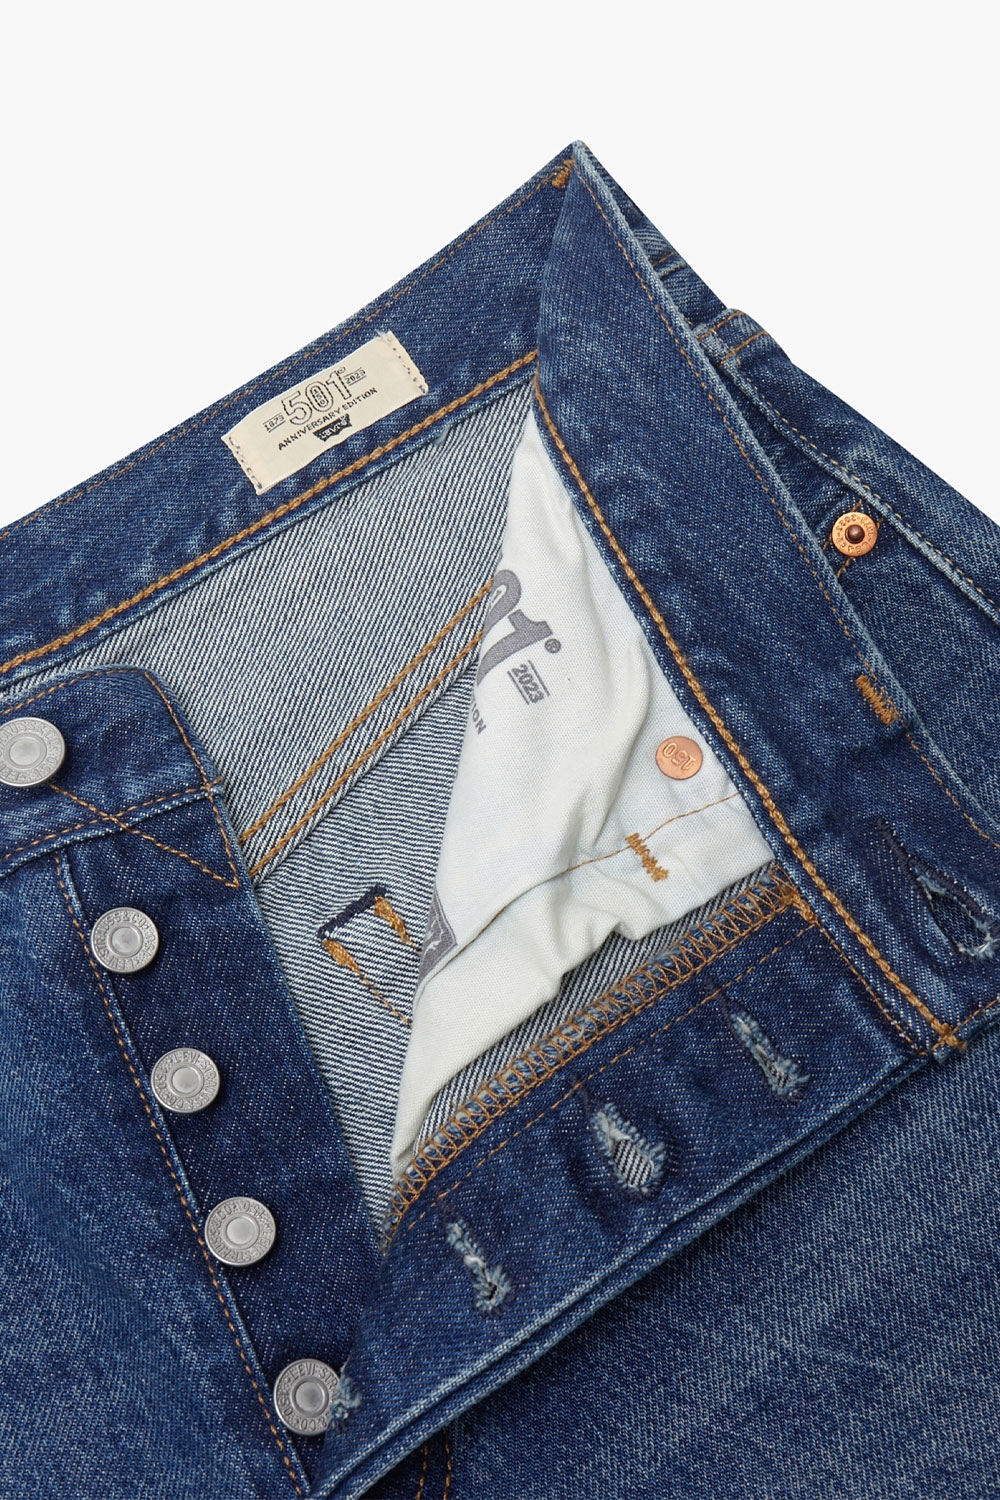 jeans levis 501 original azul denim